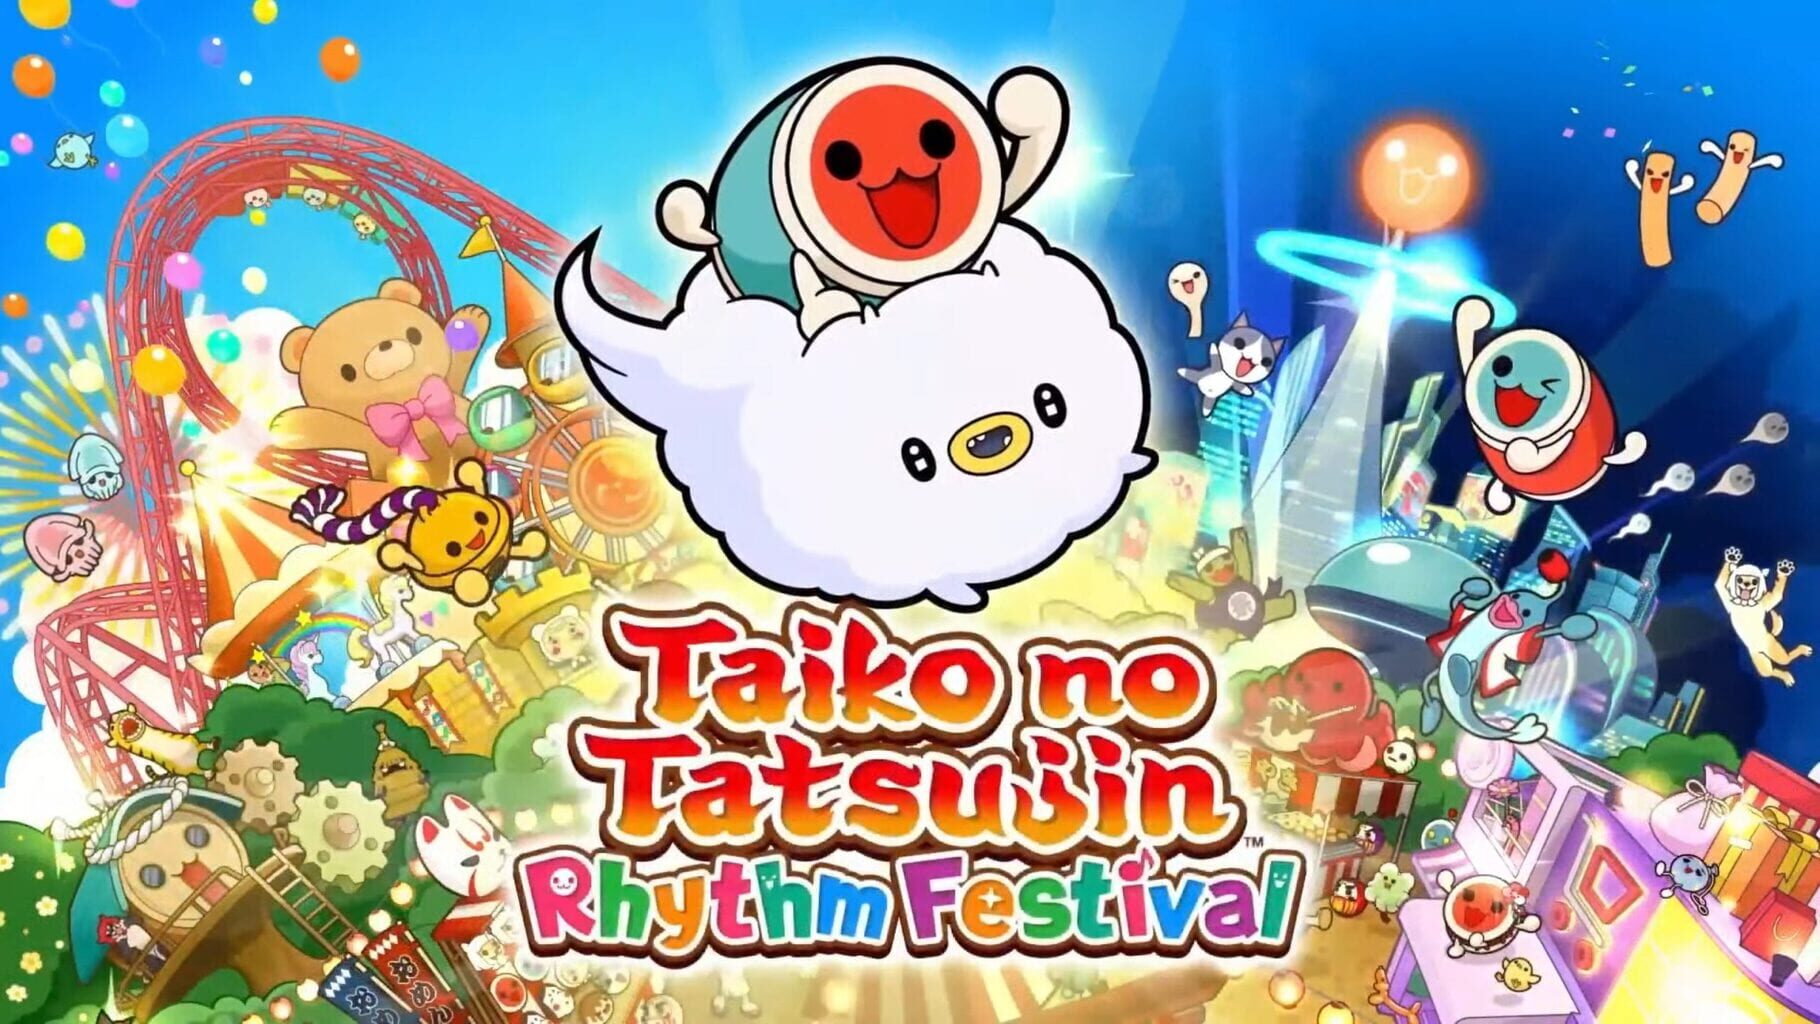 Taiko no Tatsujin: Rhythm Festival artwork